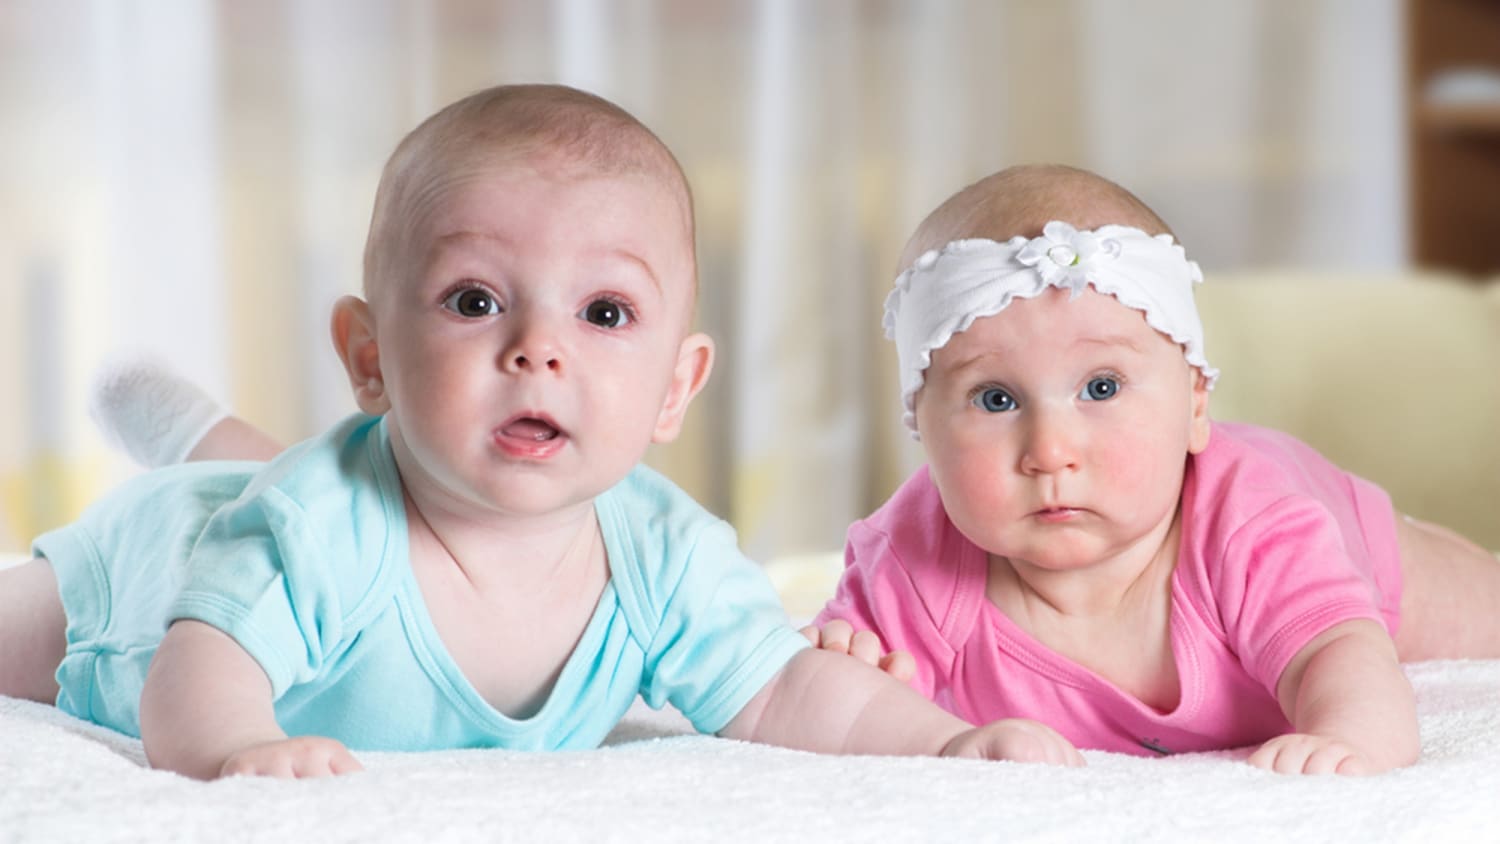 Gender-neutral baby names see uptick in popularity